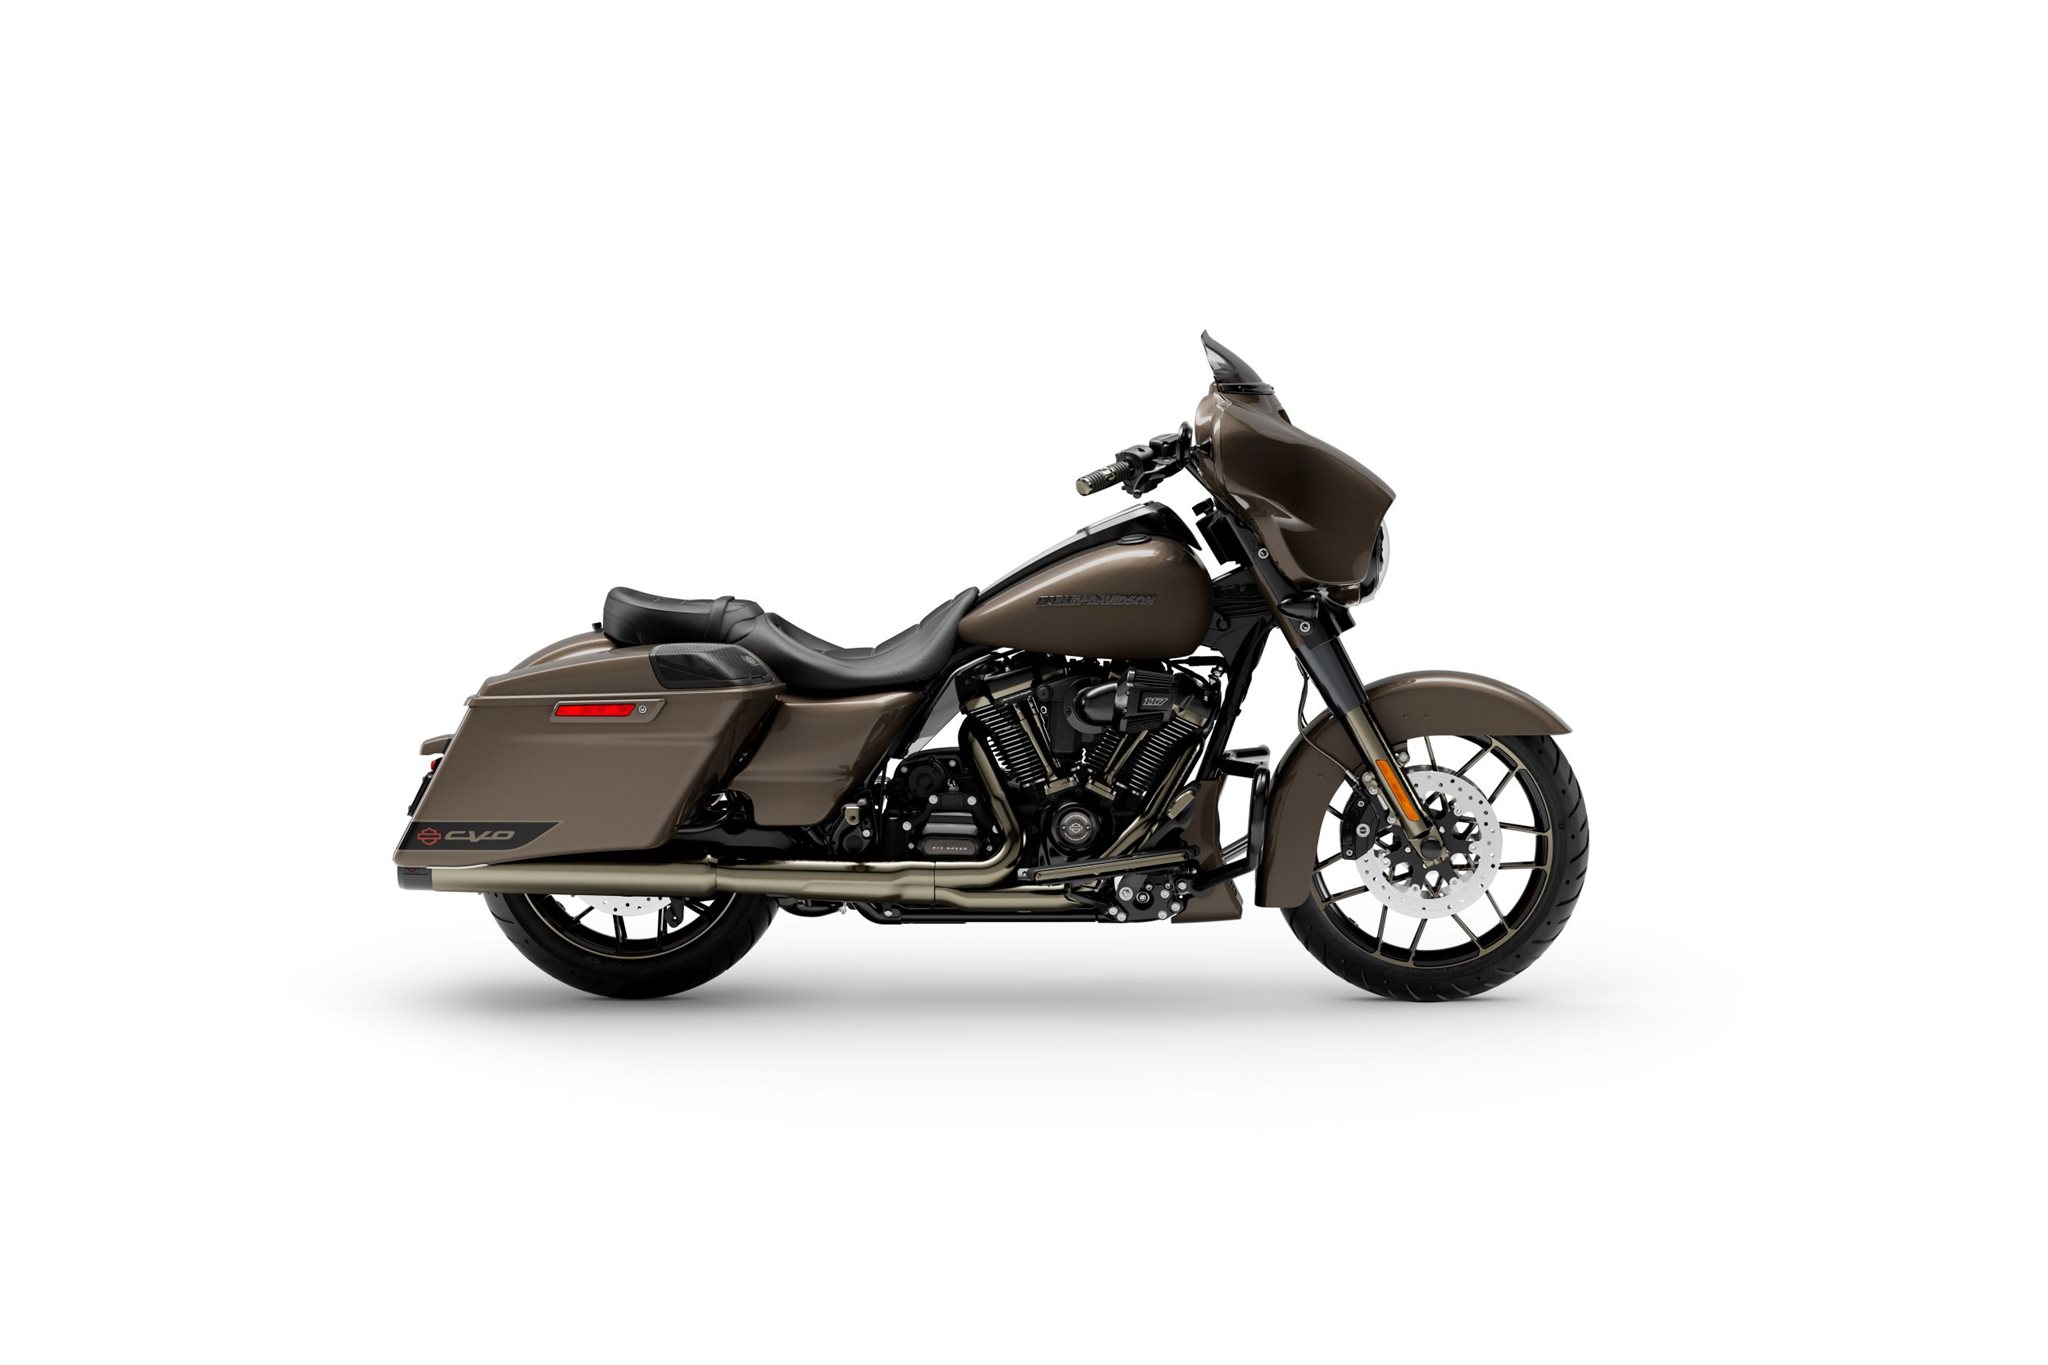 Motorrad Vergleich Harley Davidson Cvo Street Glide Flhxse 2021 Vs Harley Davidson Street Glide Flhx 2020